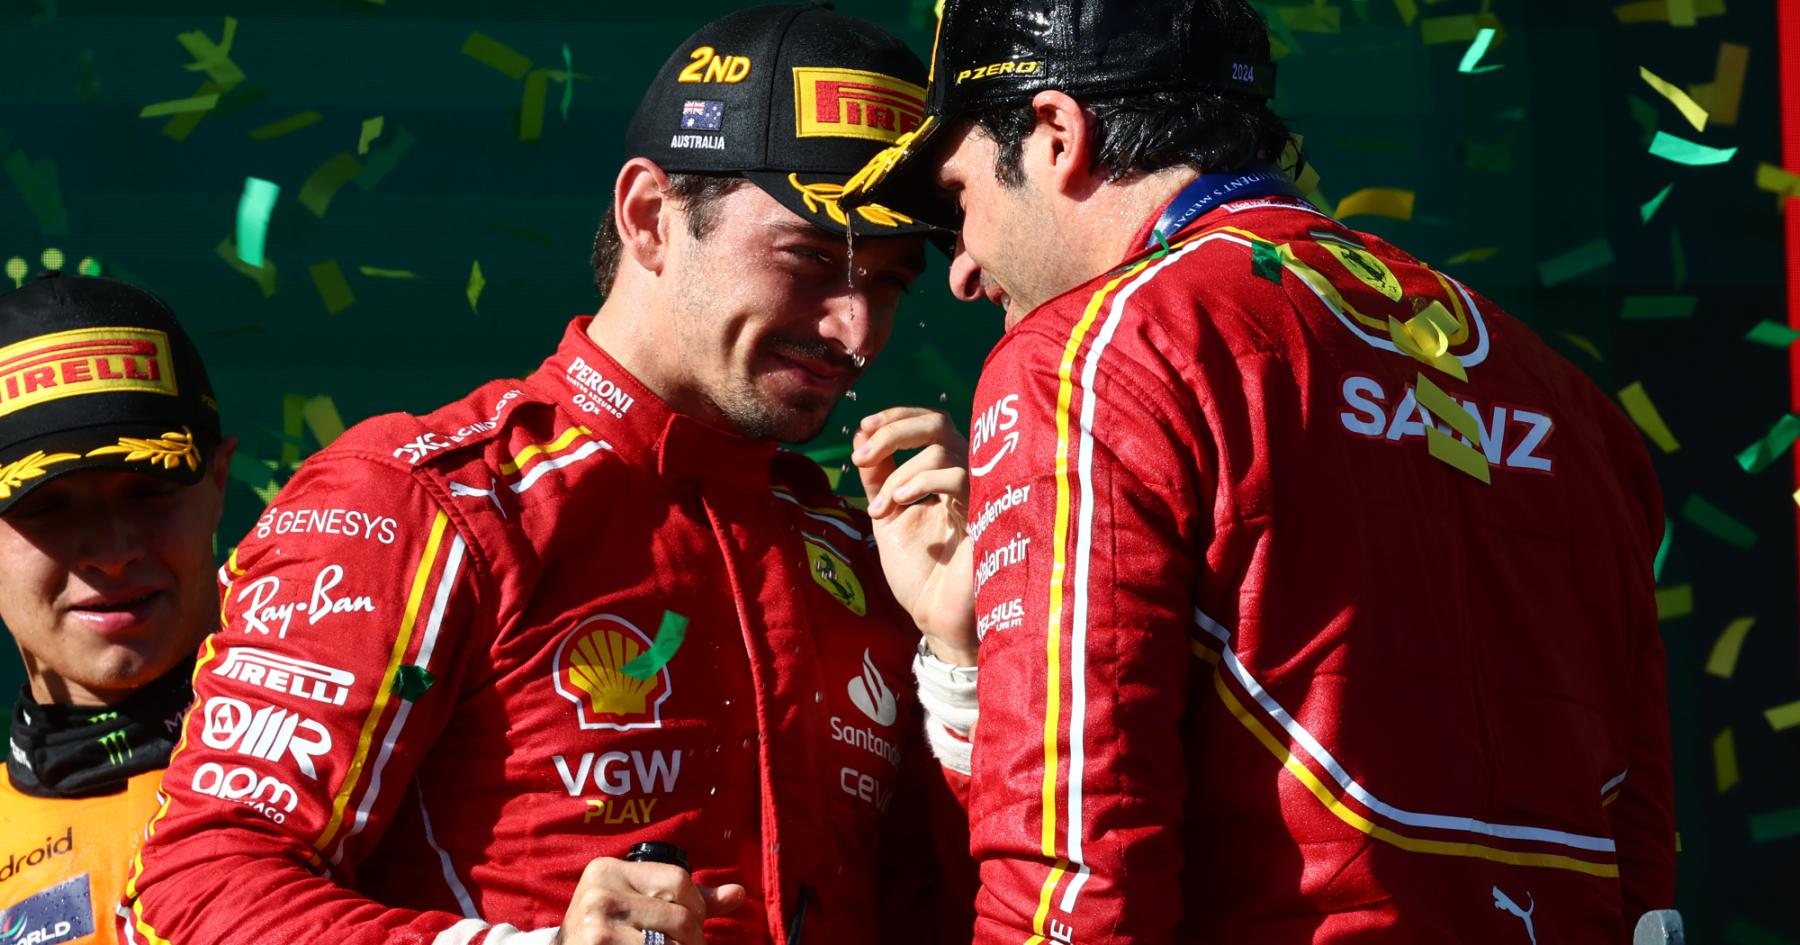 Revving Towards Victory: Ferrari's Quest for Championship Triumph